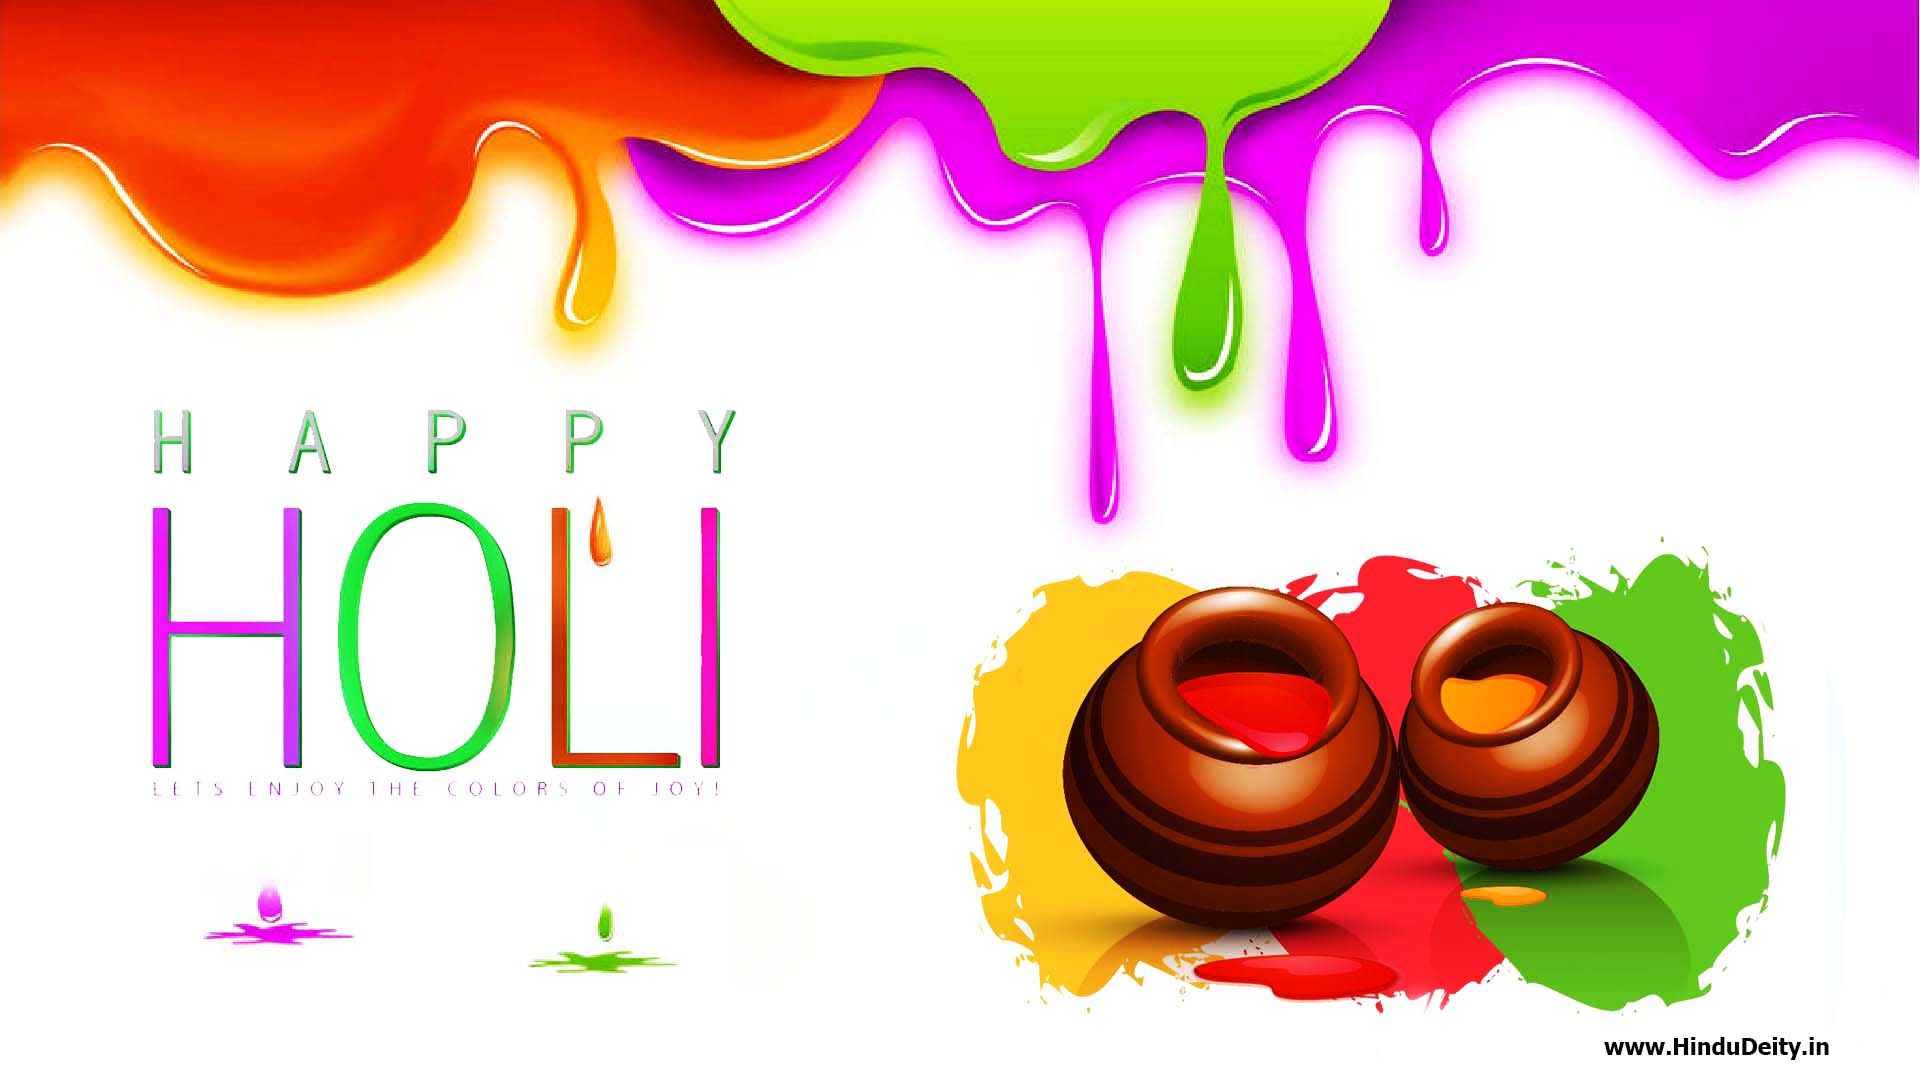 Download Holi Festival Wallpaper. Holi image, Holi, Holi colors